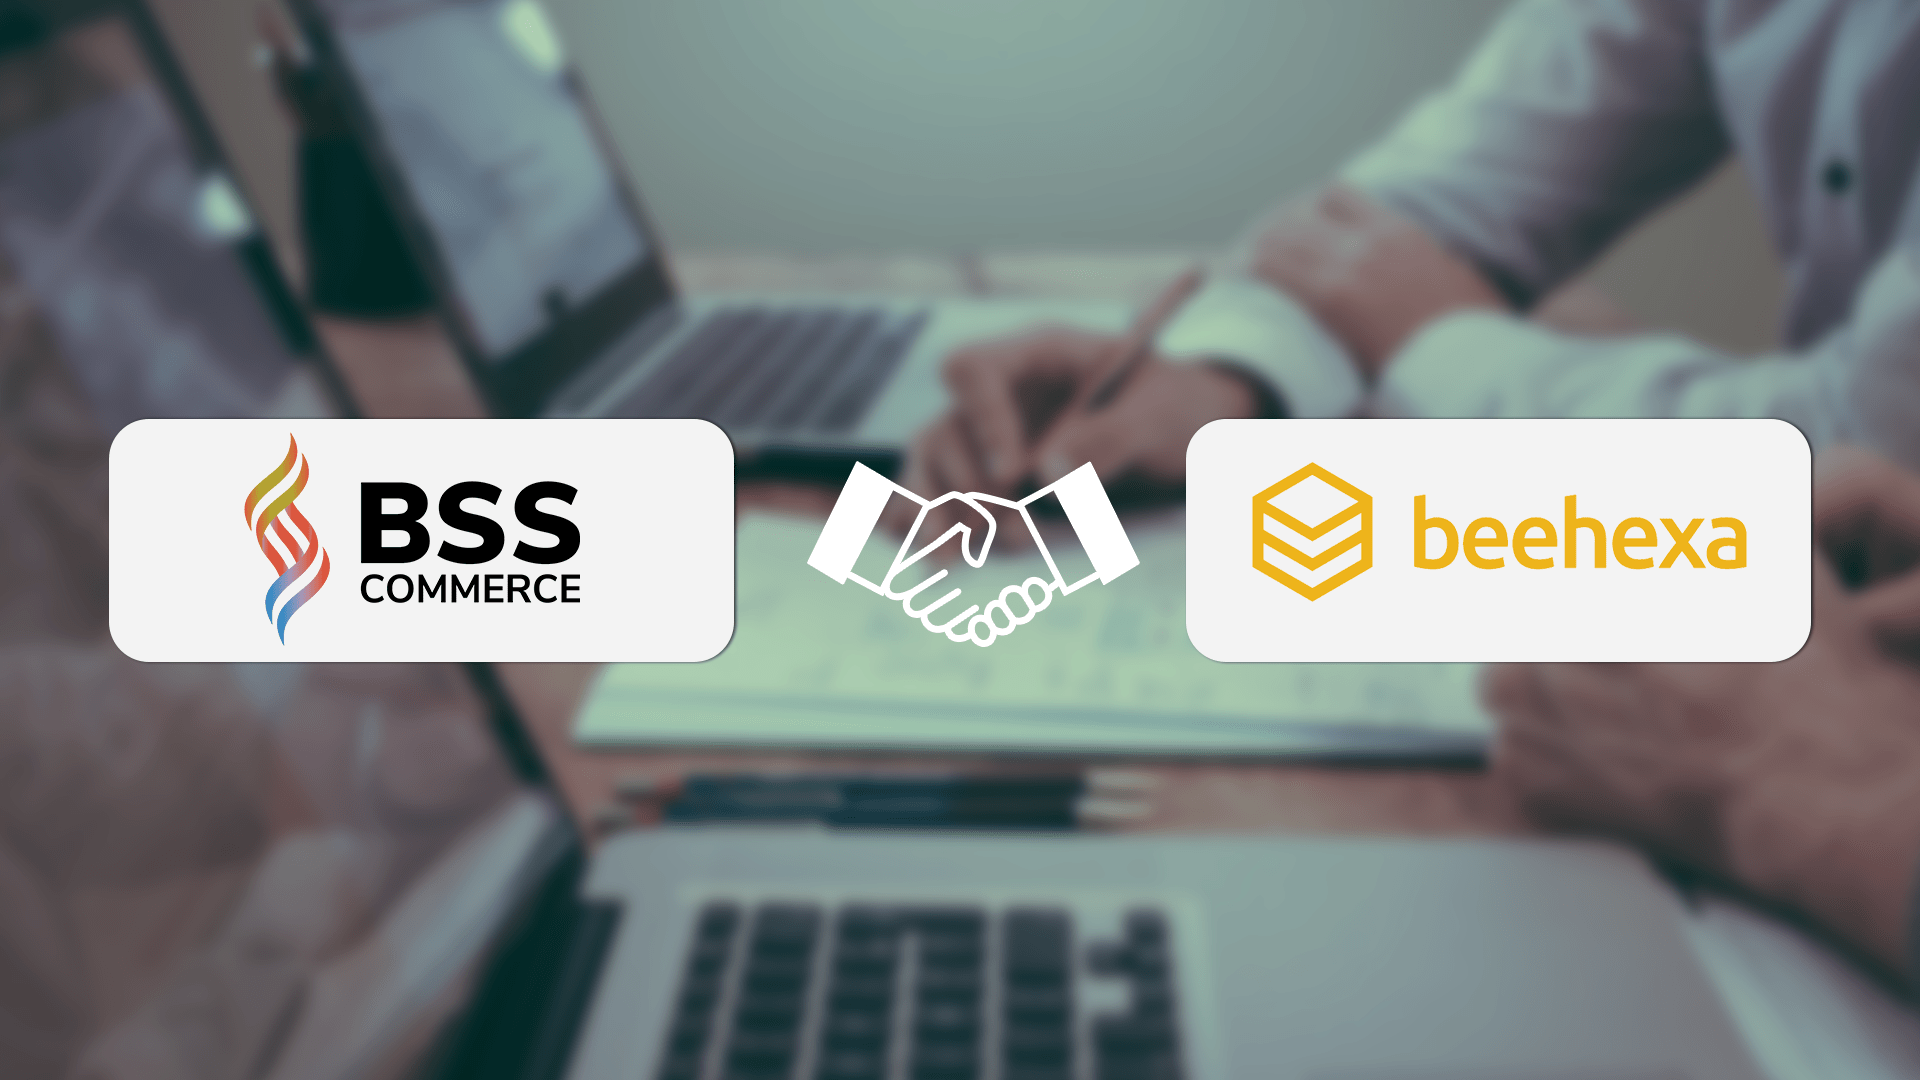 BSS Commerce And Beehexa Partnership 